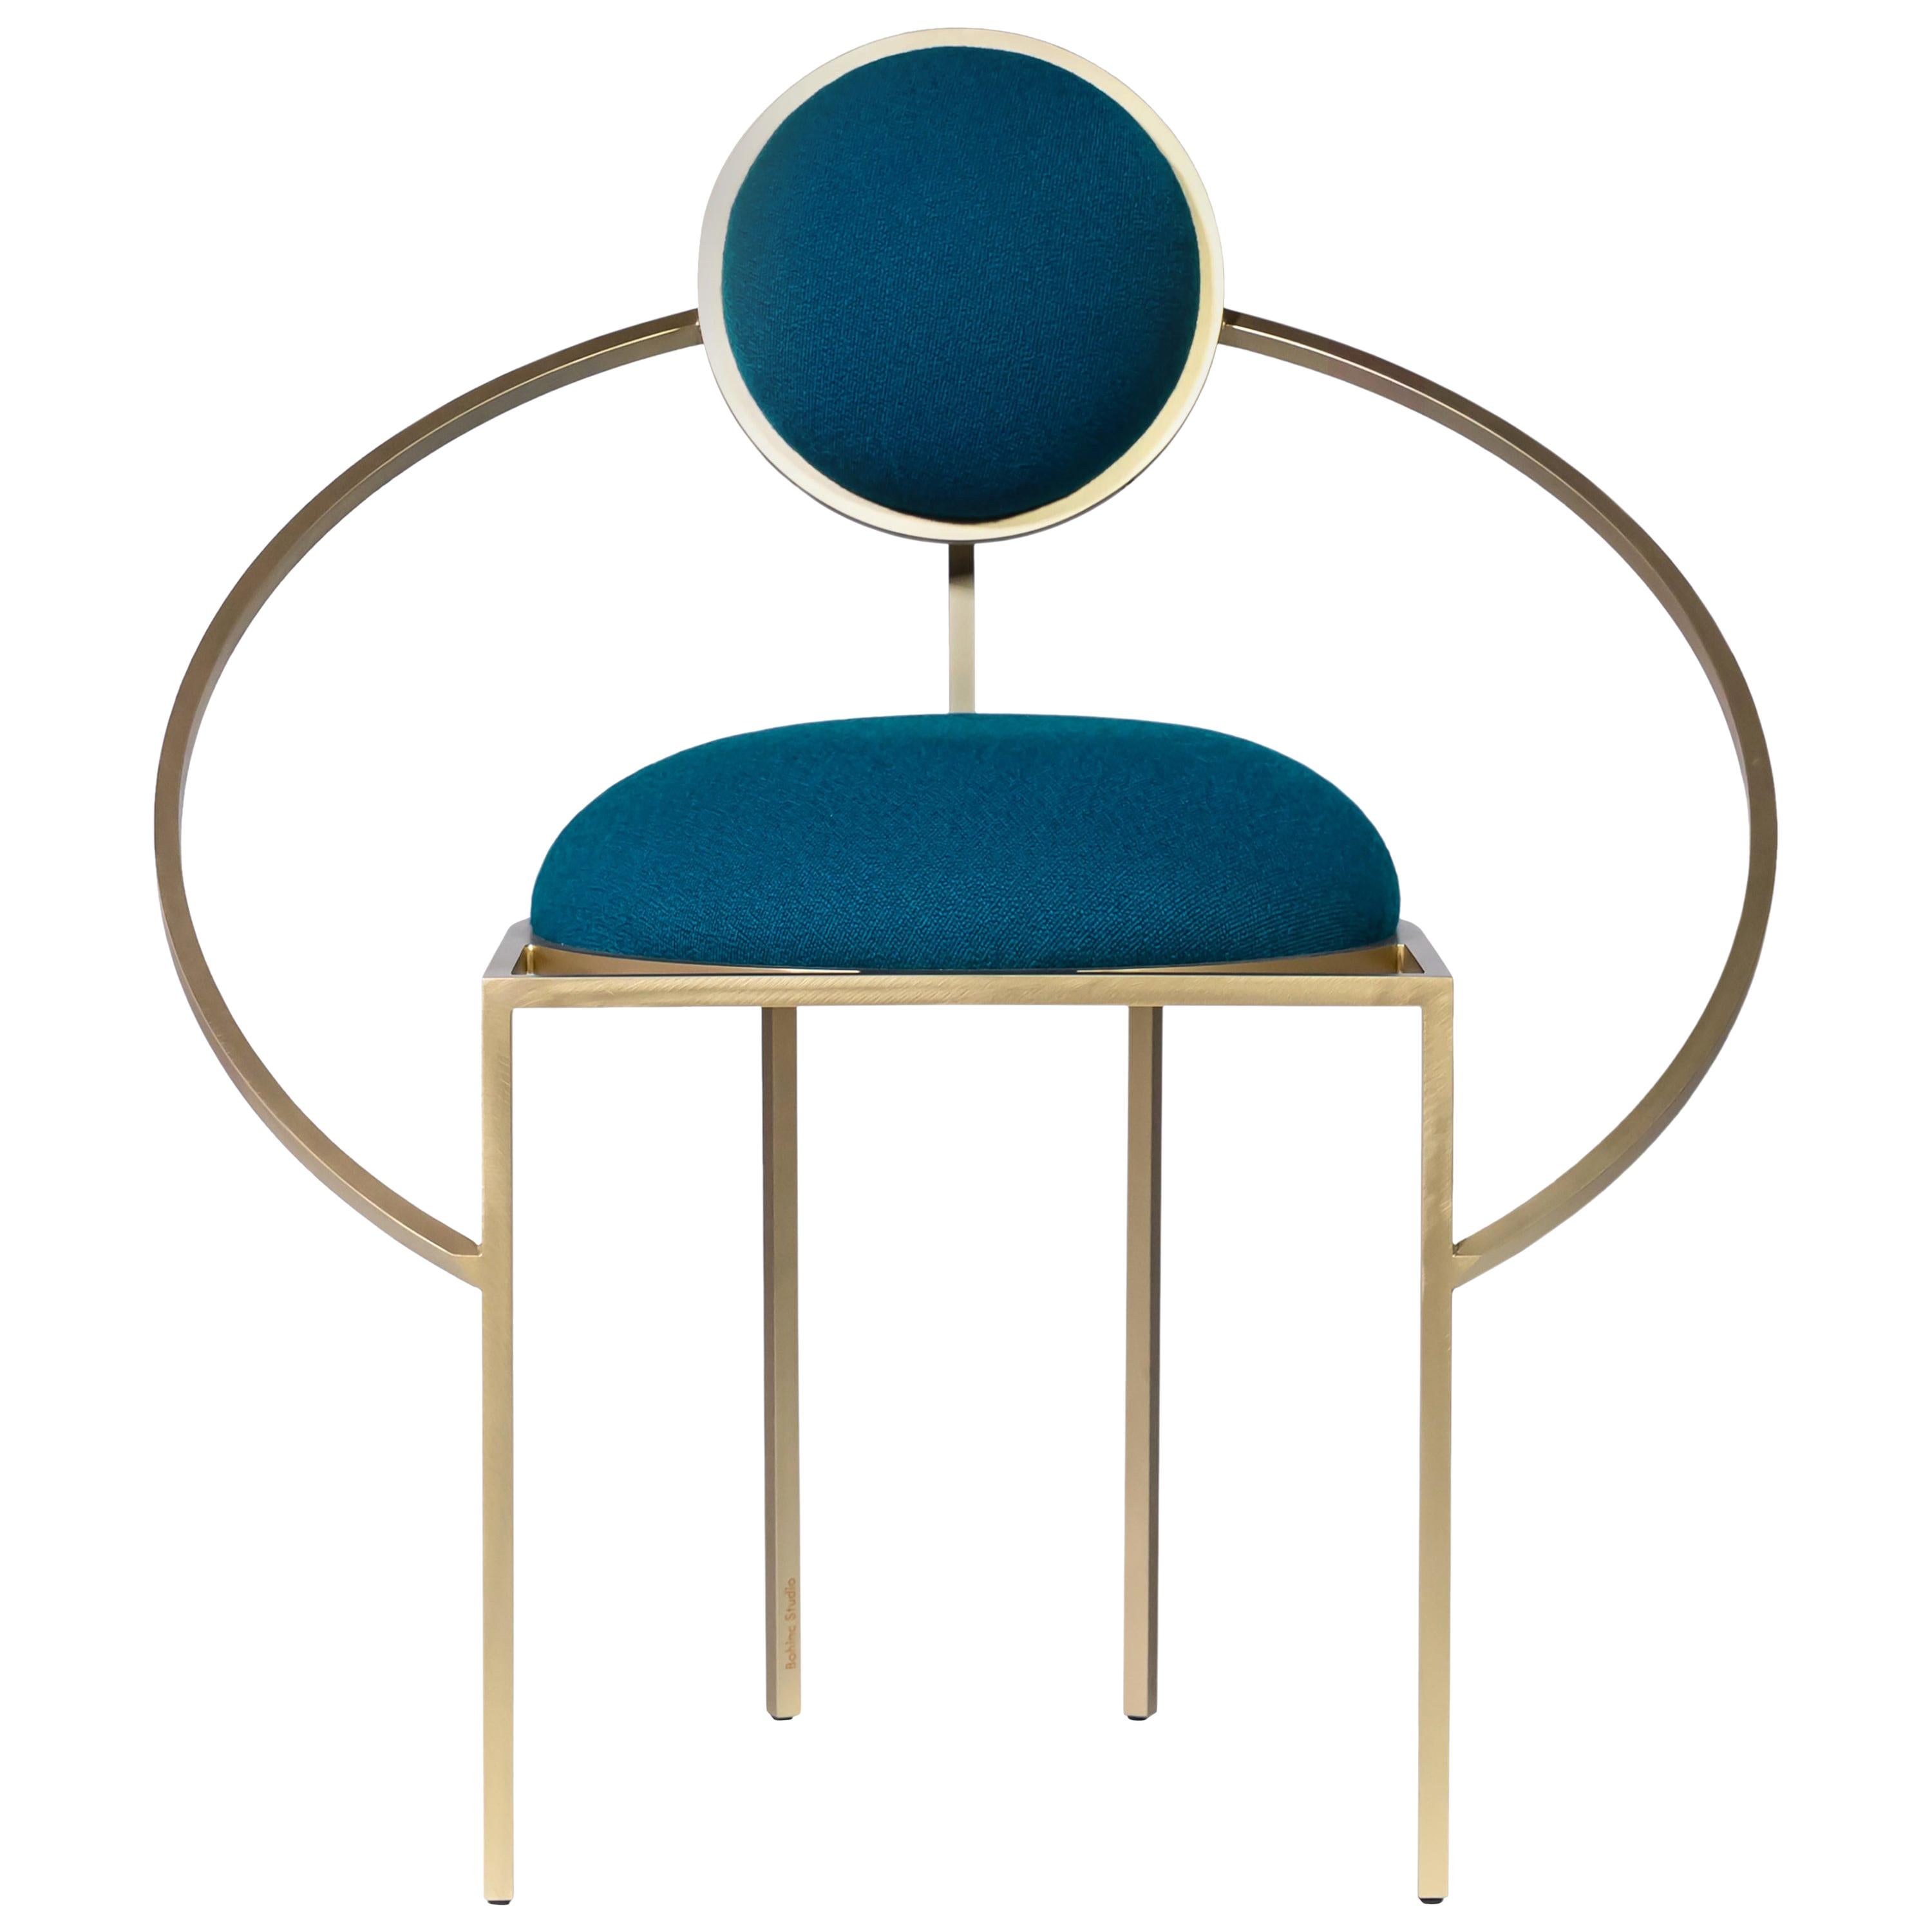 Lara Bohinc, Orbit Chair, Brushed Brass and Blue Wool Fabric